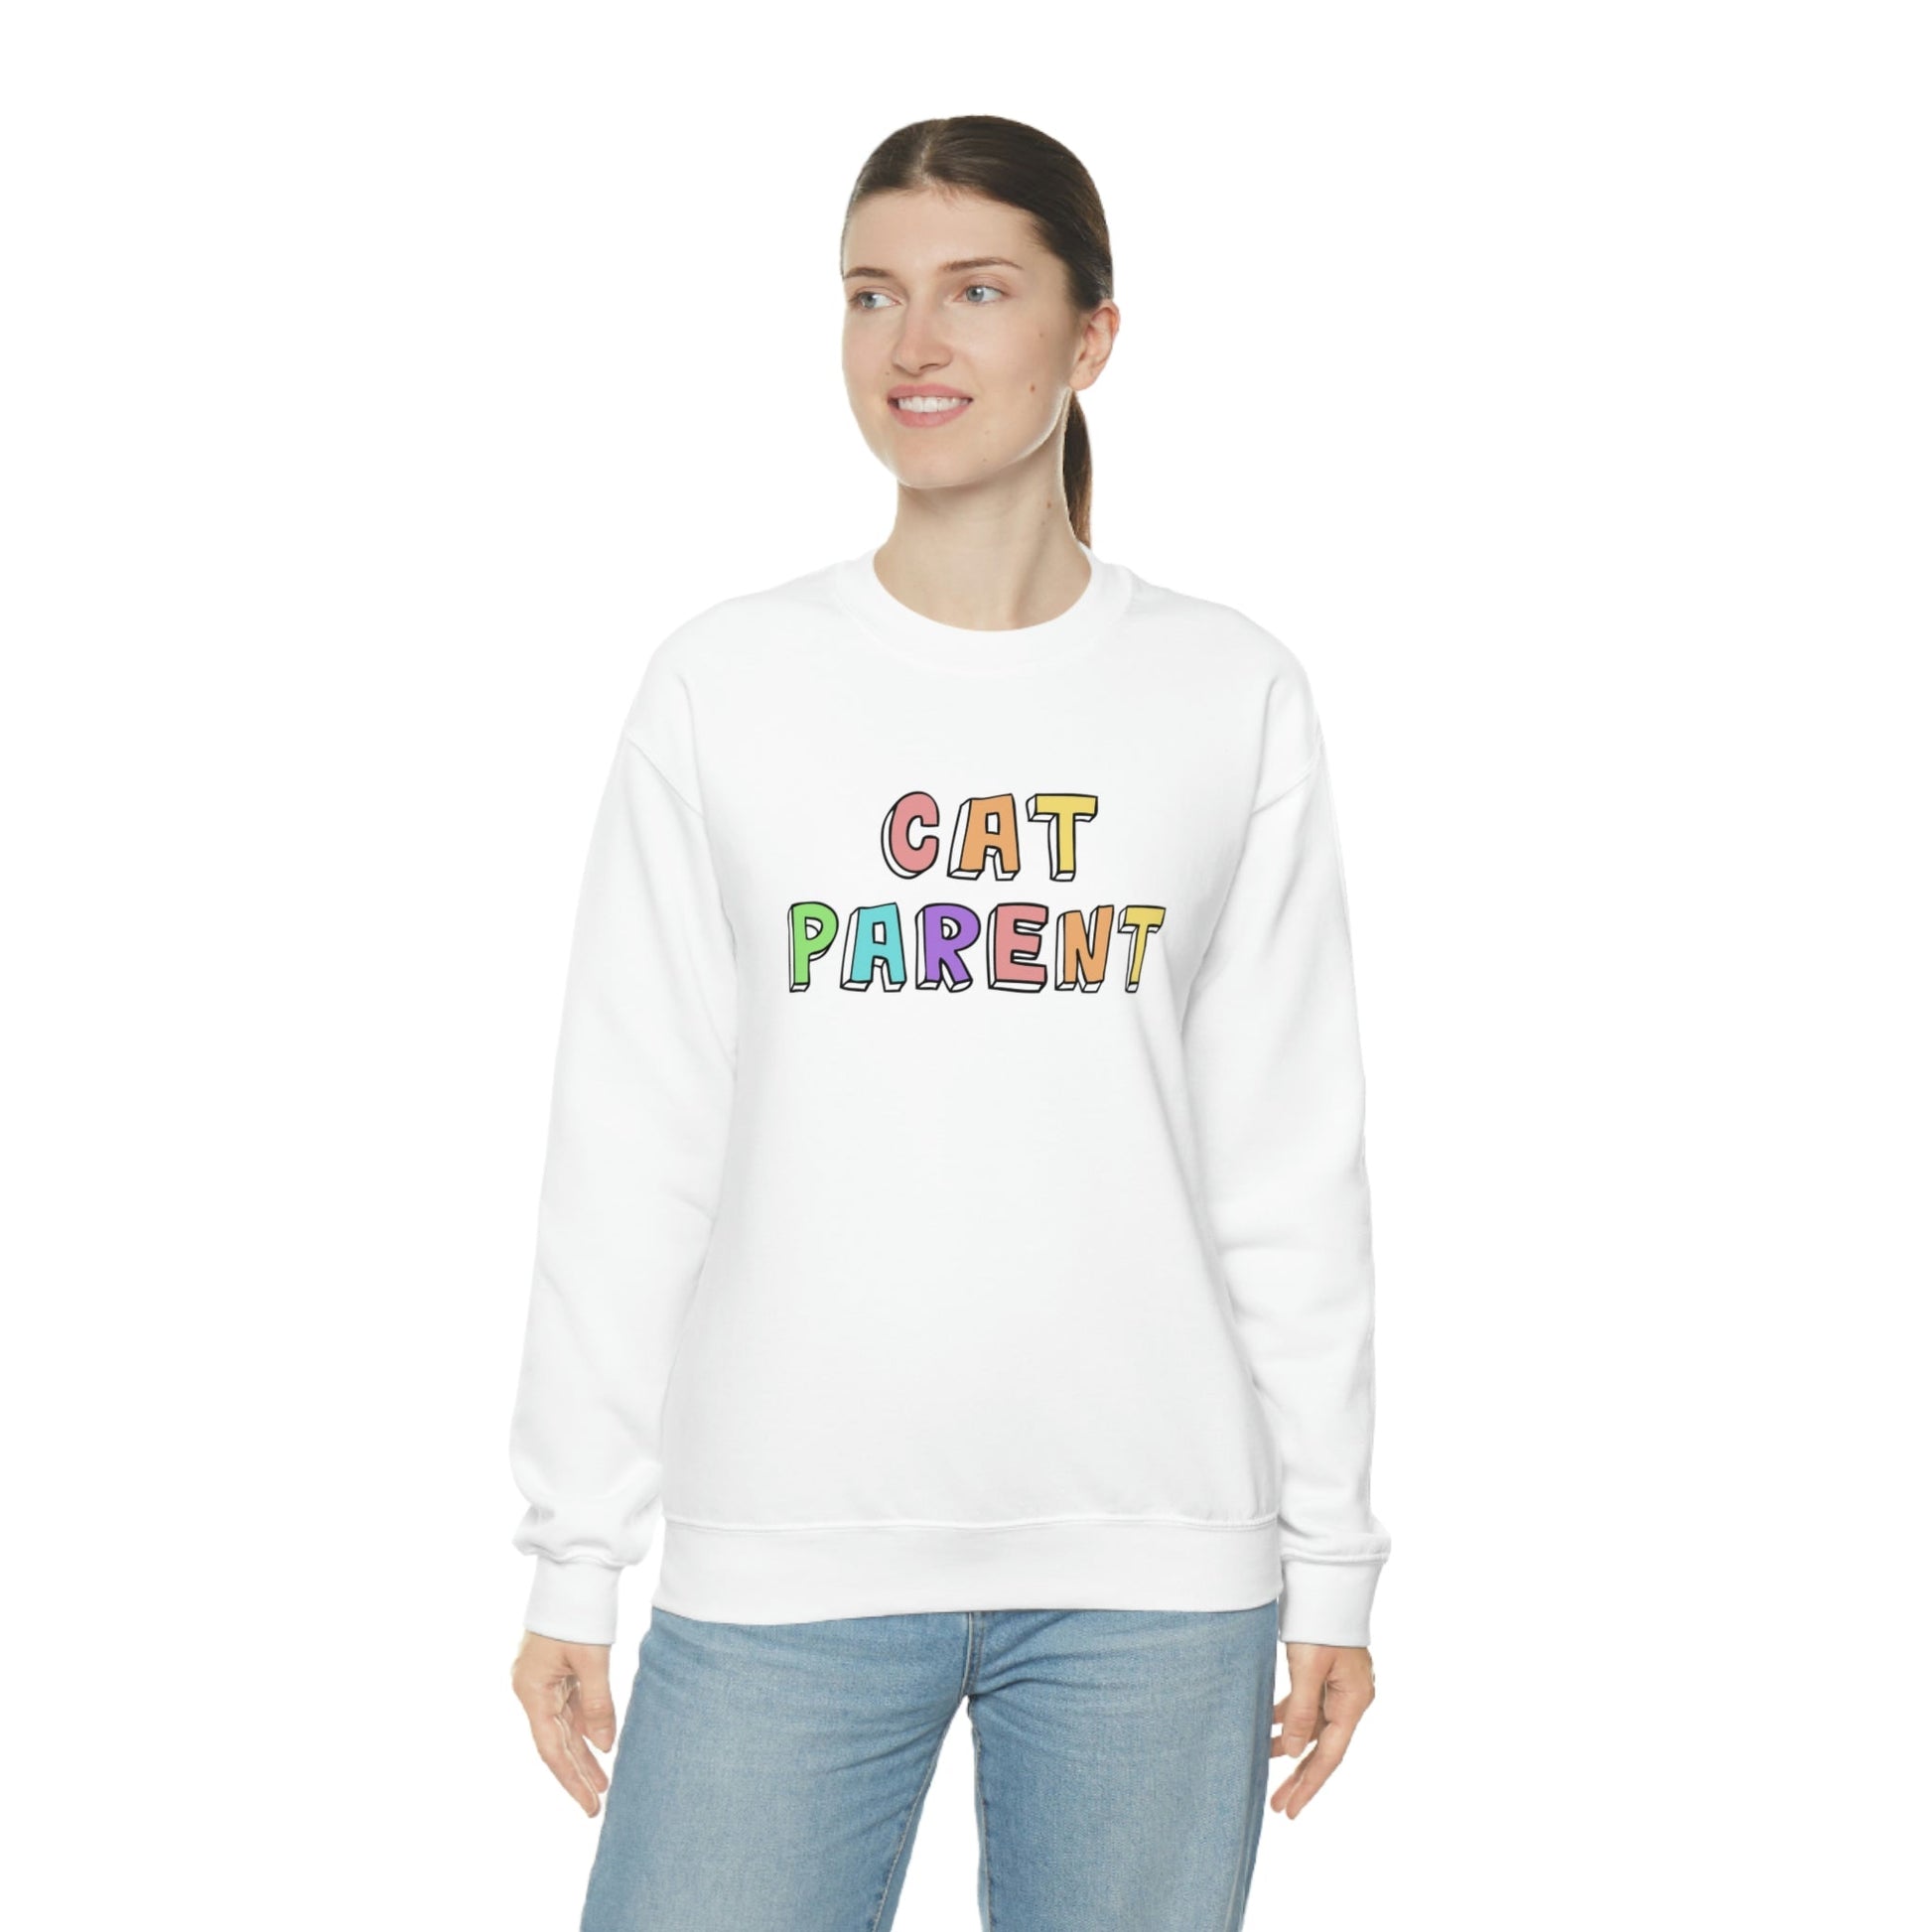 Cat Parent | Crewneck Sweatshirt - Detezi Designs-89383818710349034553